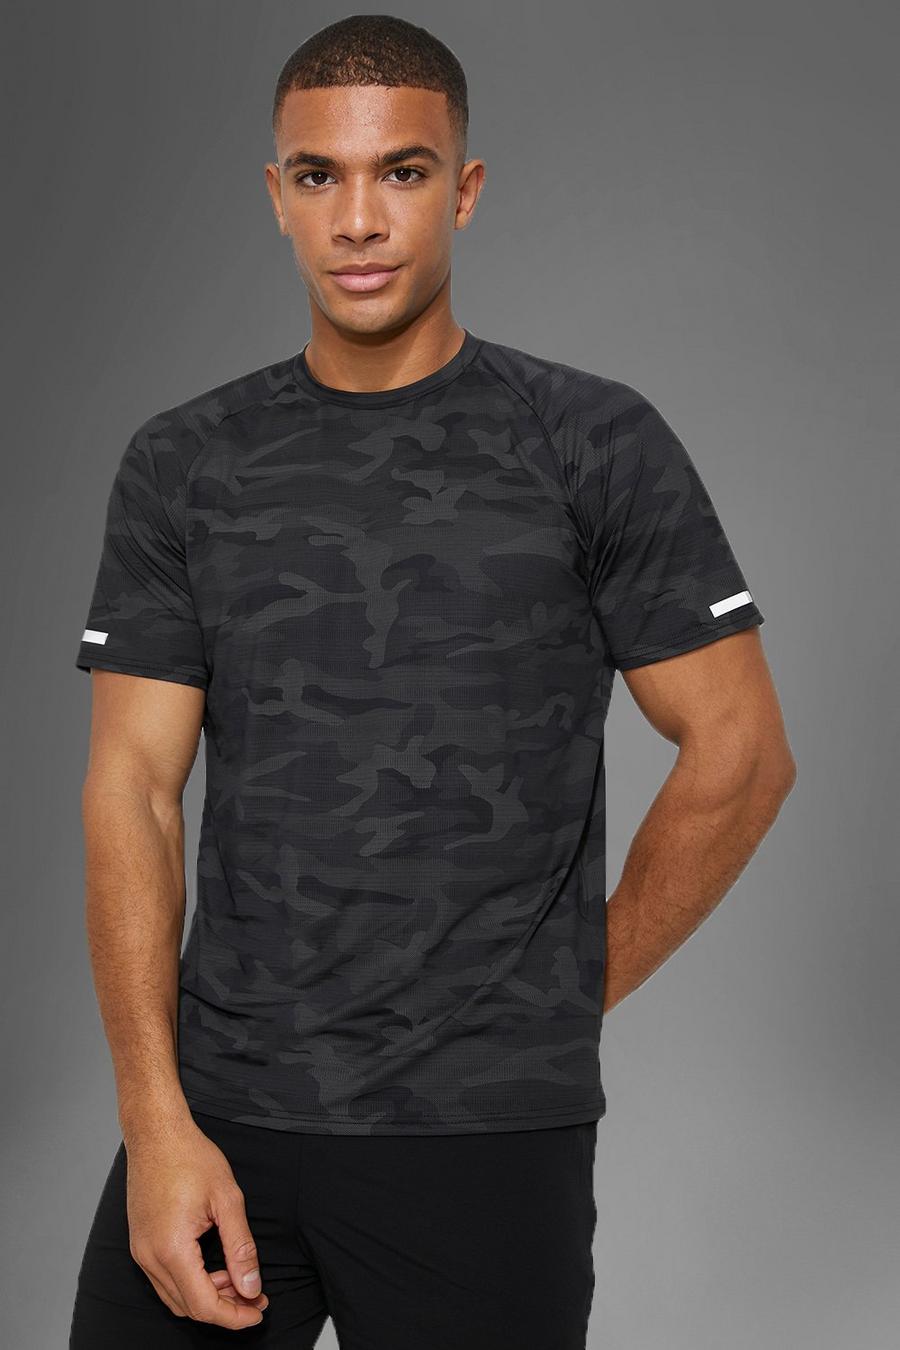 Black schwarz Active Camo Fitness Performance Raglan T-Shirt